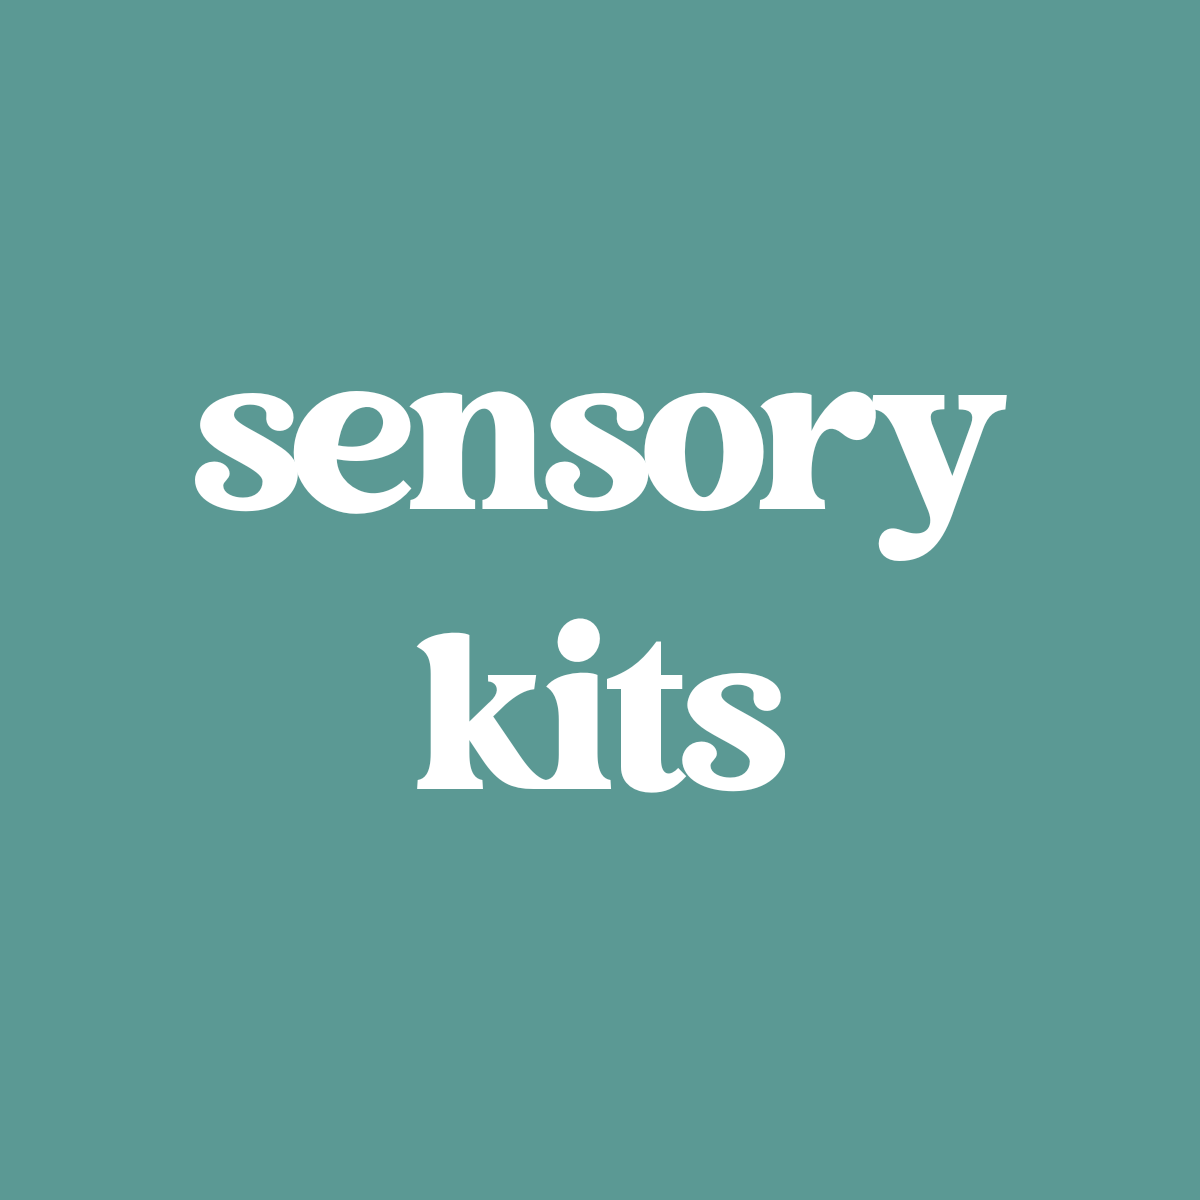 Sensory Kits